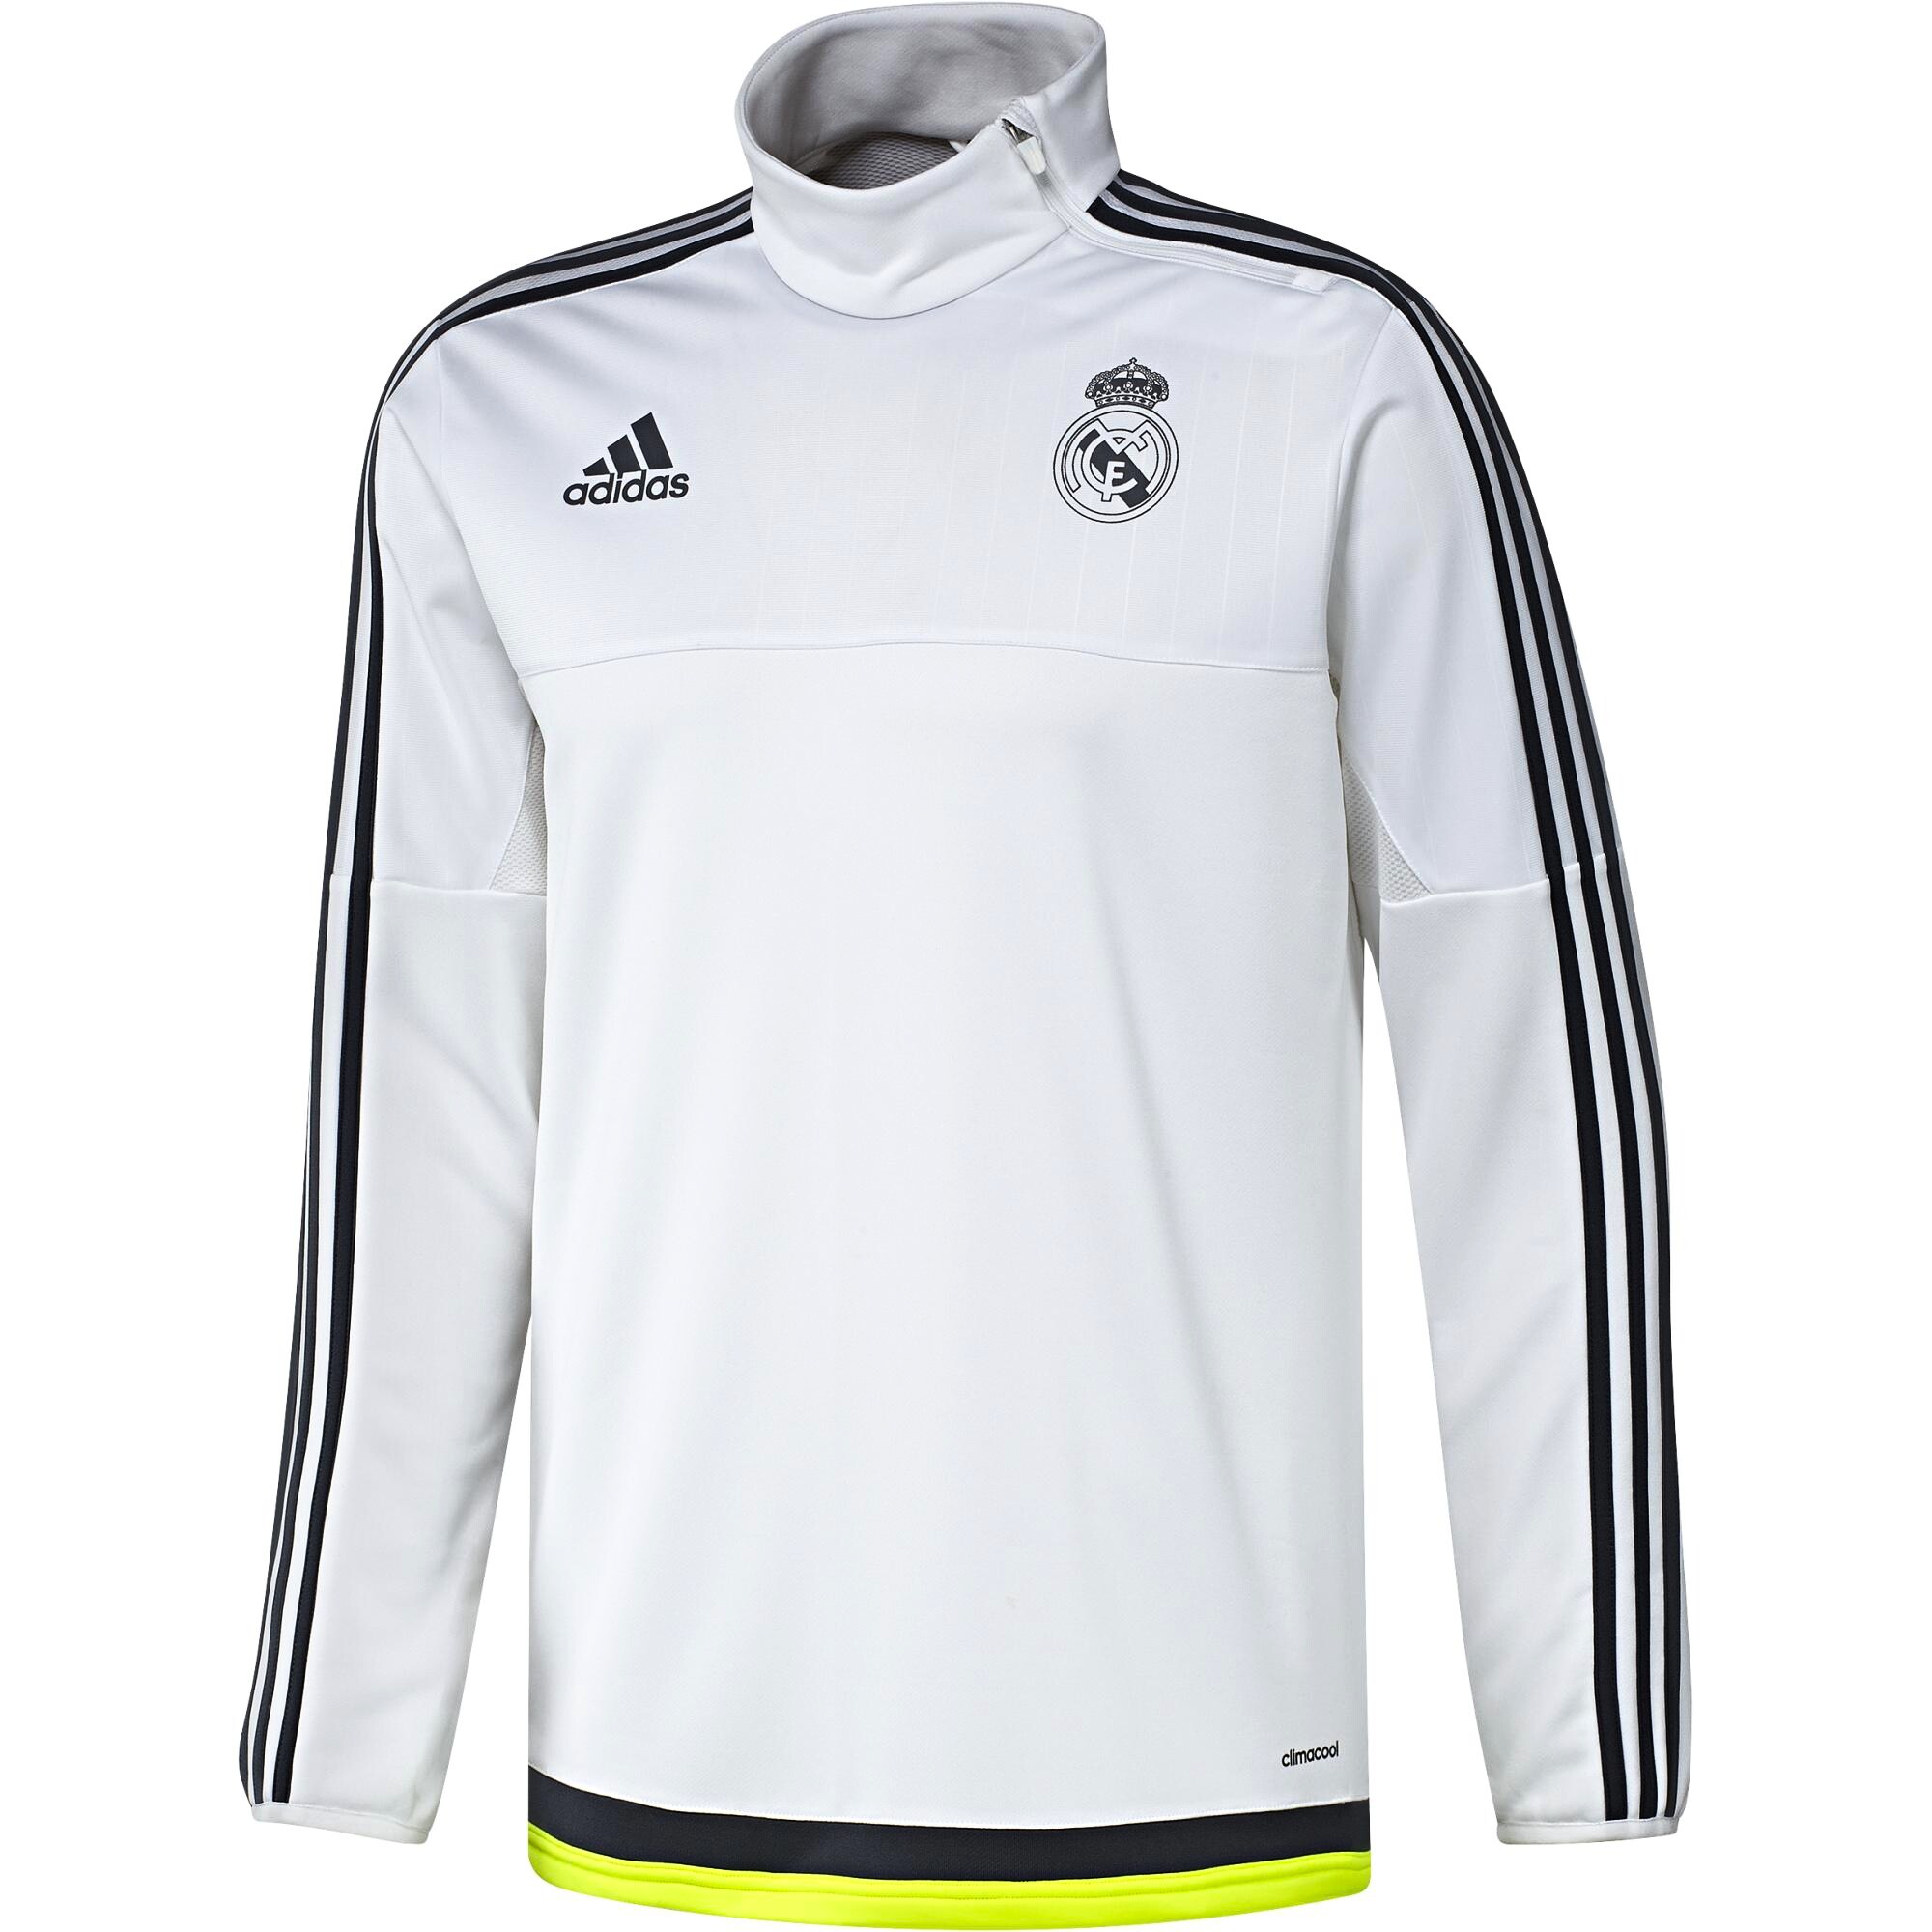 Адидас реал. Кофта adidas real Madrid 2006. Adidas real Madrid кофта. Свитшот adidas real Madrid. Adidas real Madrid Training Top.